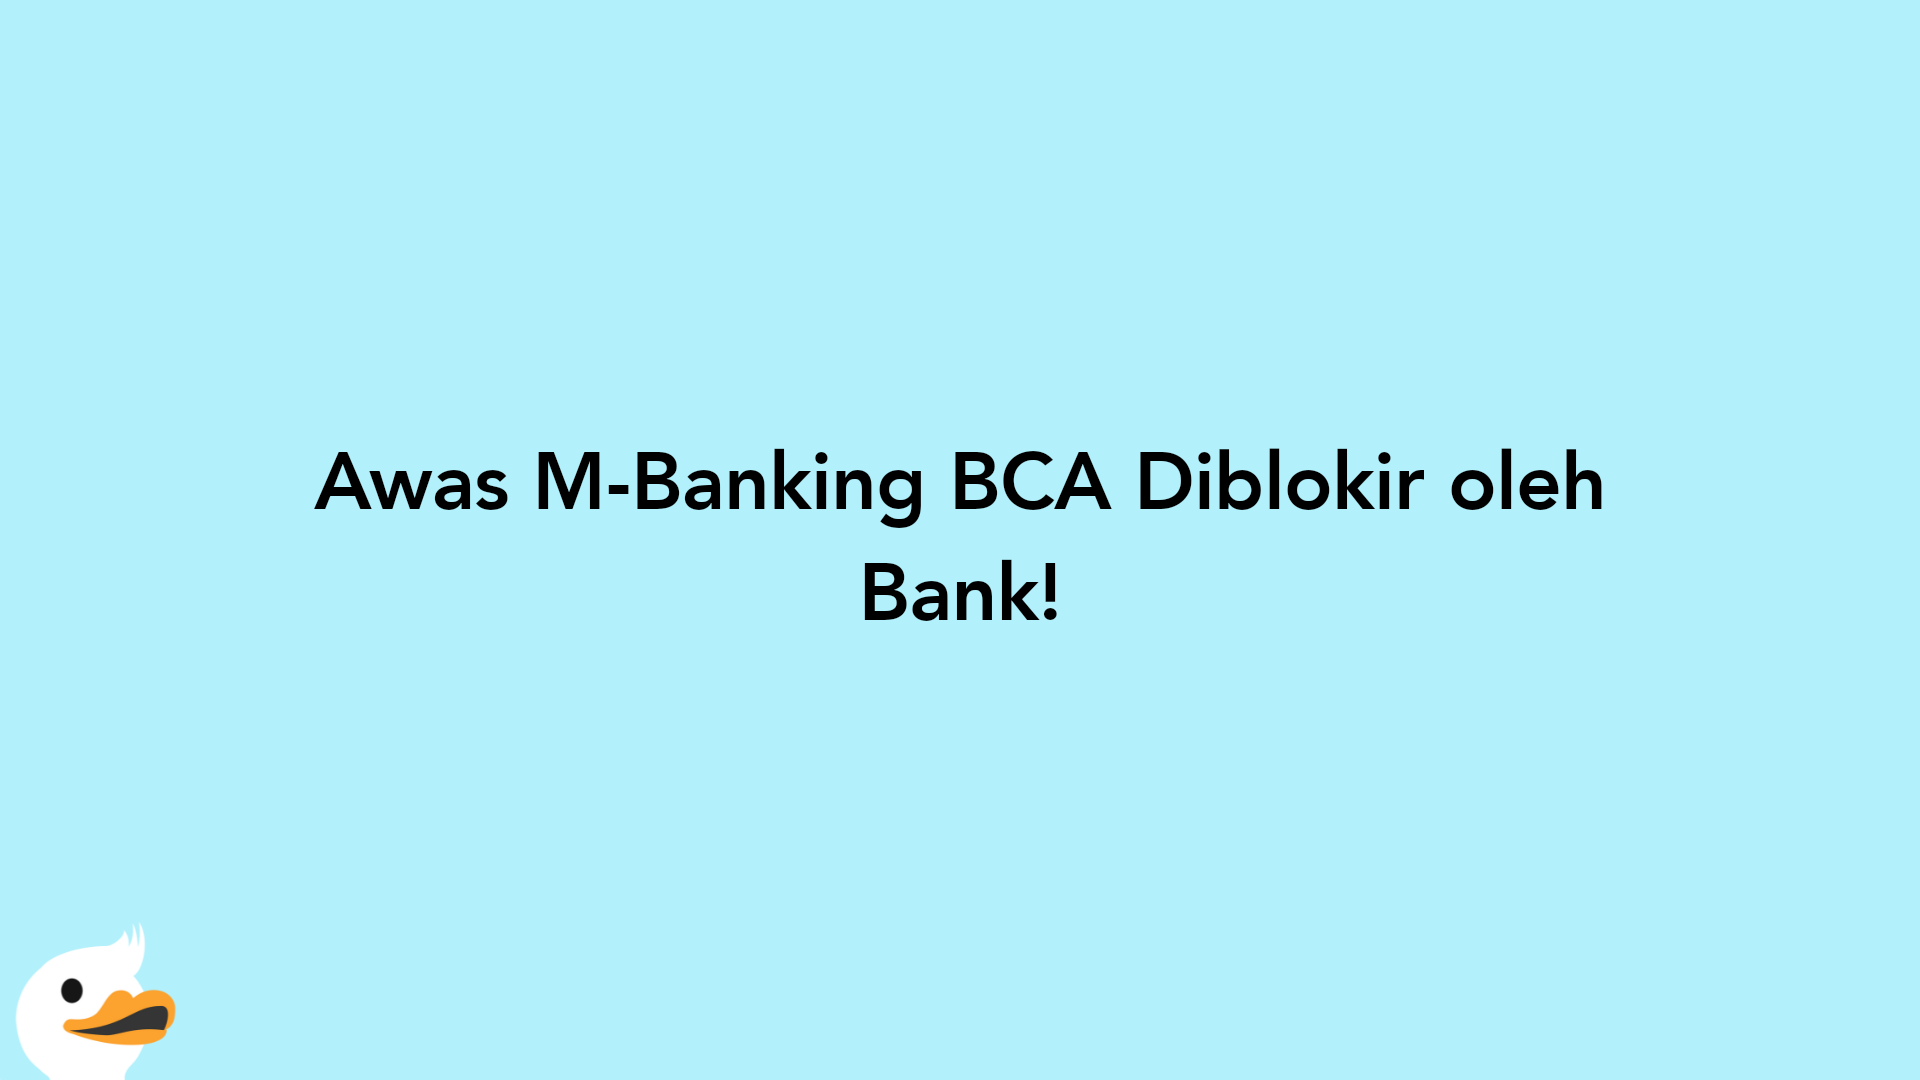 Awas M-Banking BCA Diblokir oleh Bank!